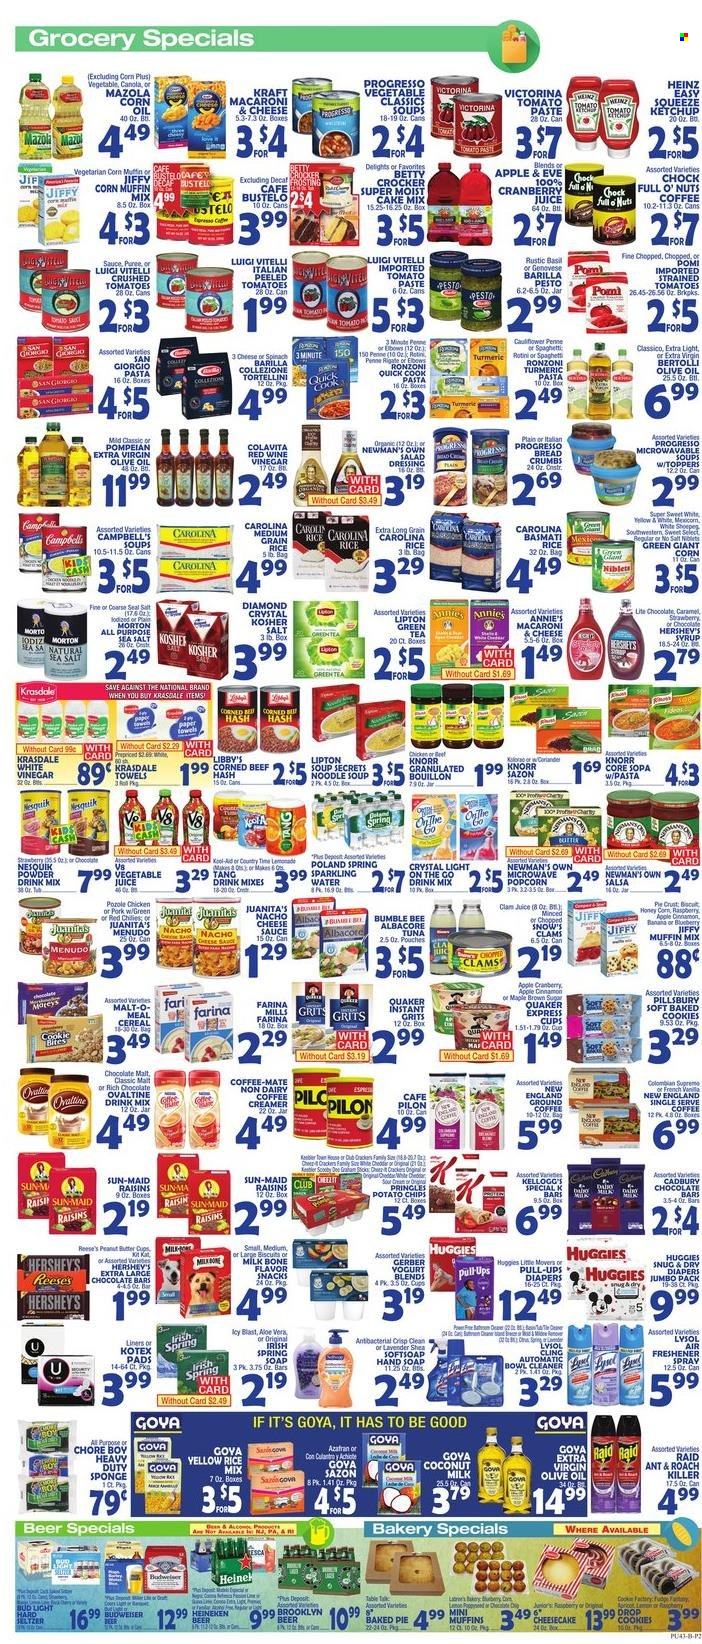 Bravo Supermarkets ad  - 11.26.2021 - 12.02.2021.